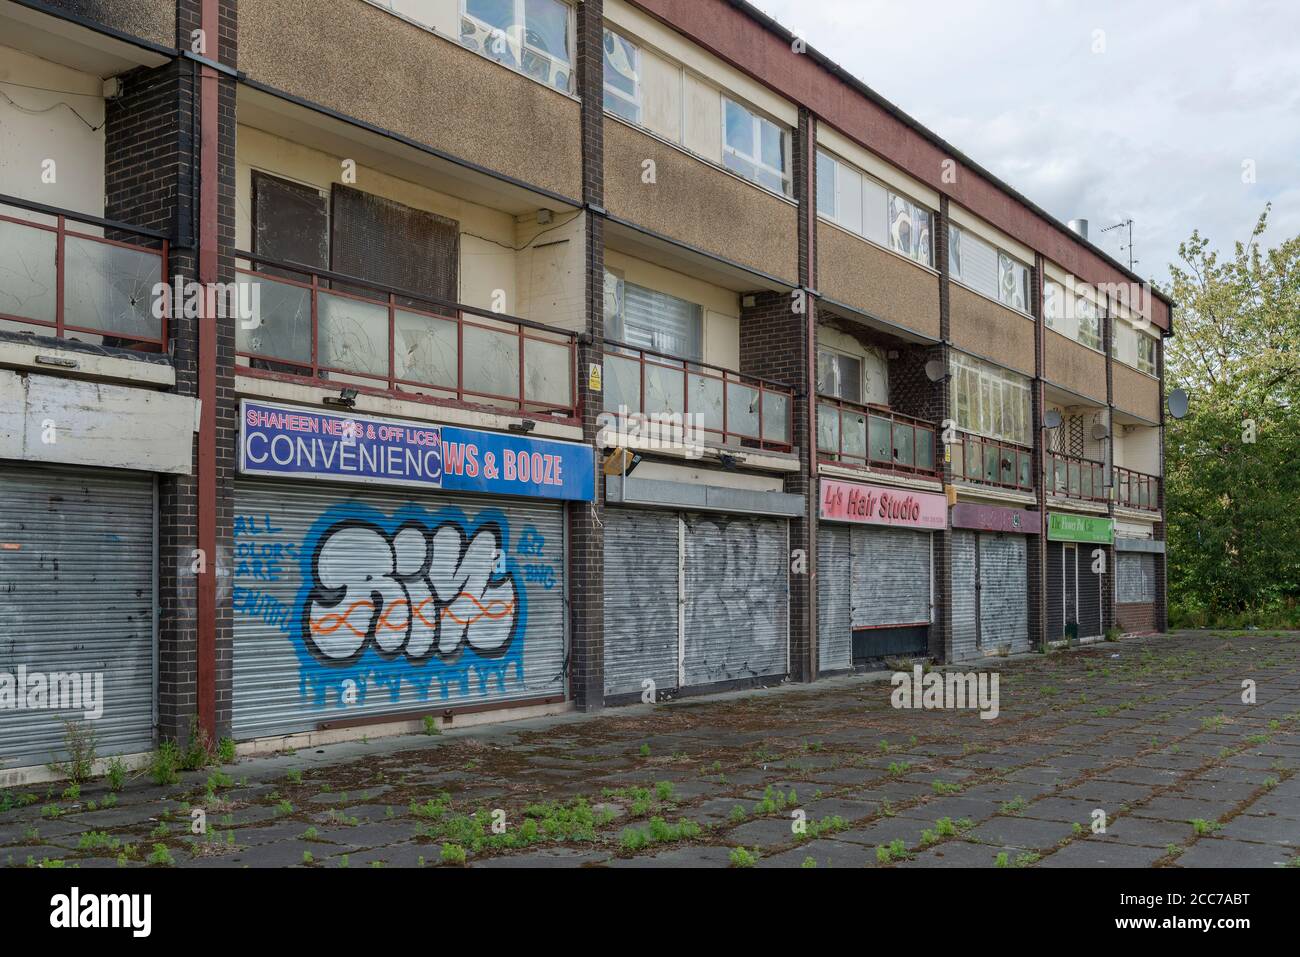 A deserted small precinct centre located in Collyhurst, Manchester. Stock Photo